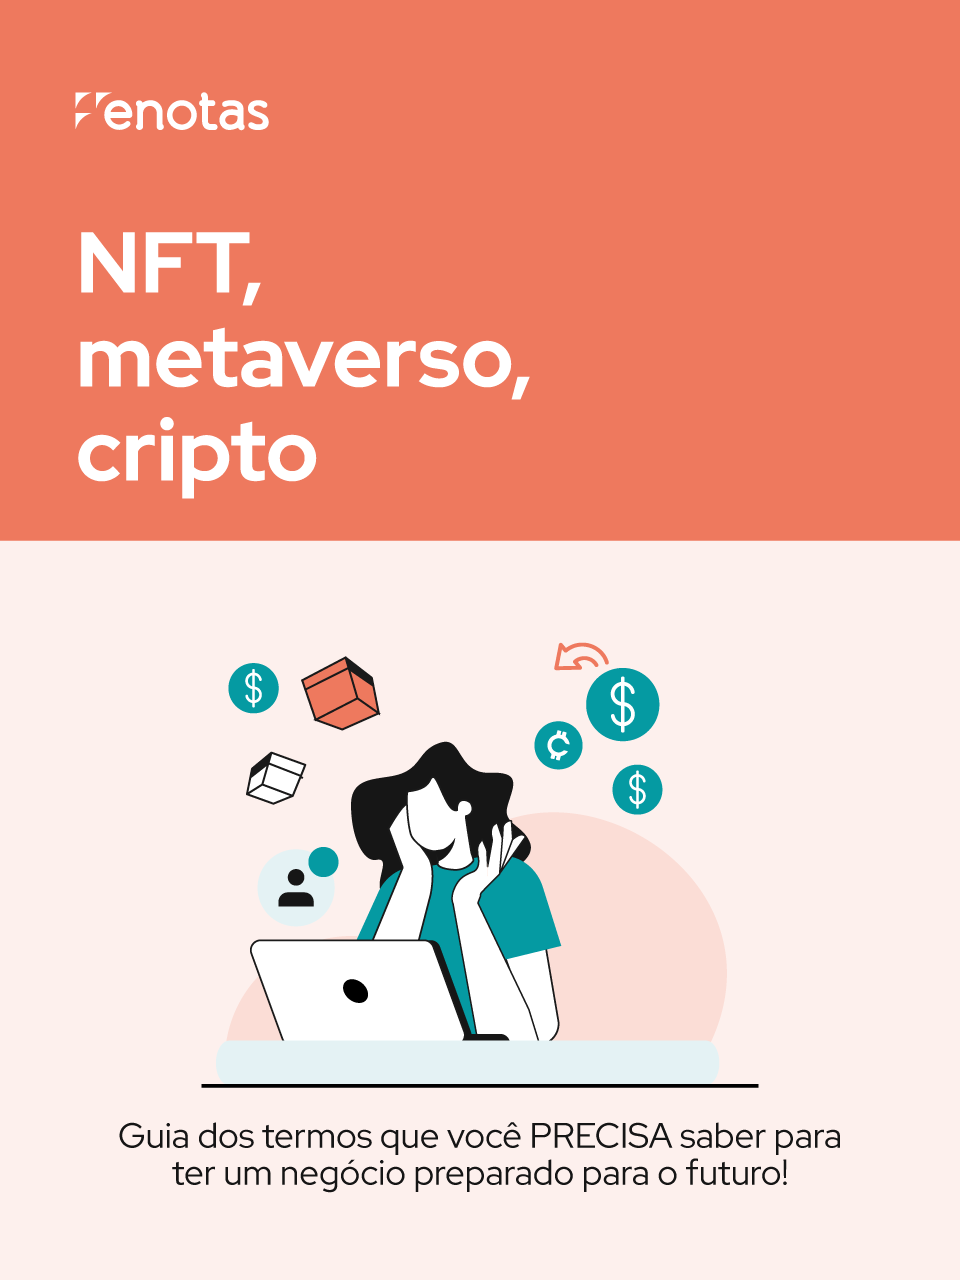 Guia: NFT, metaverso, cripto